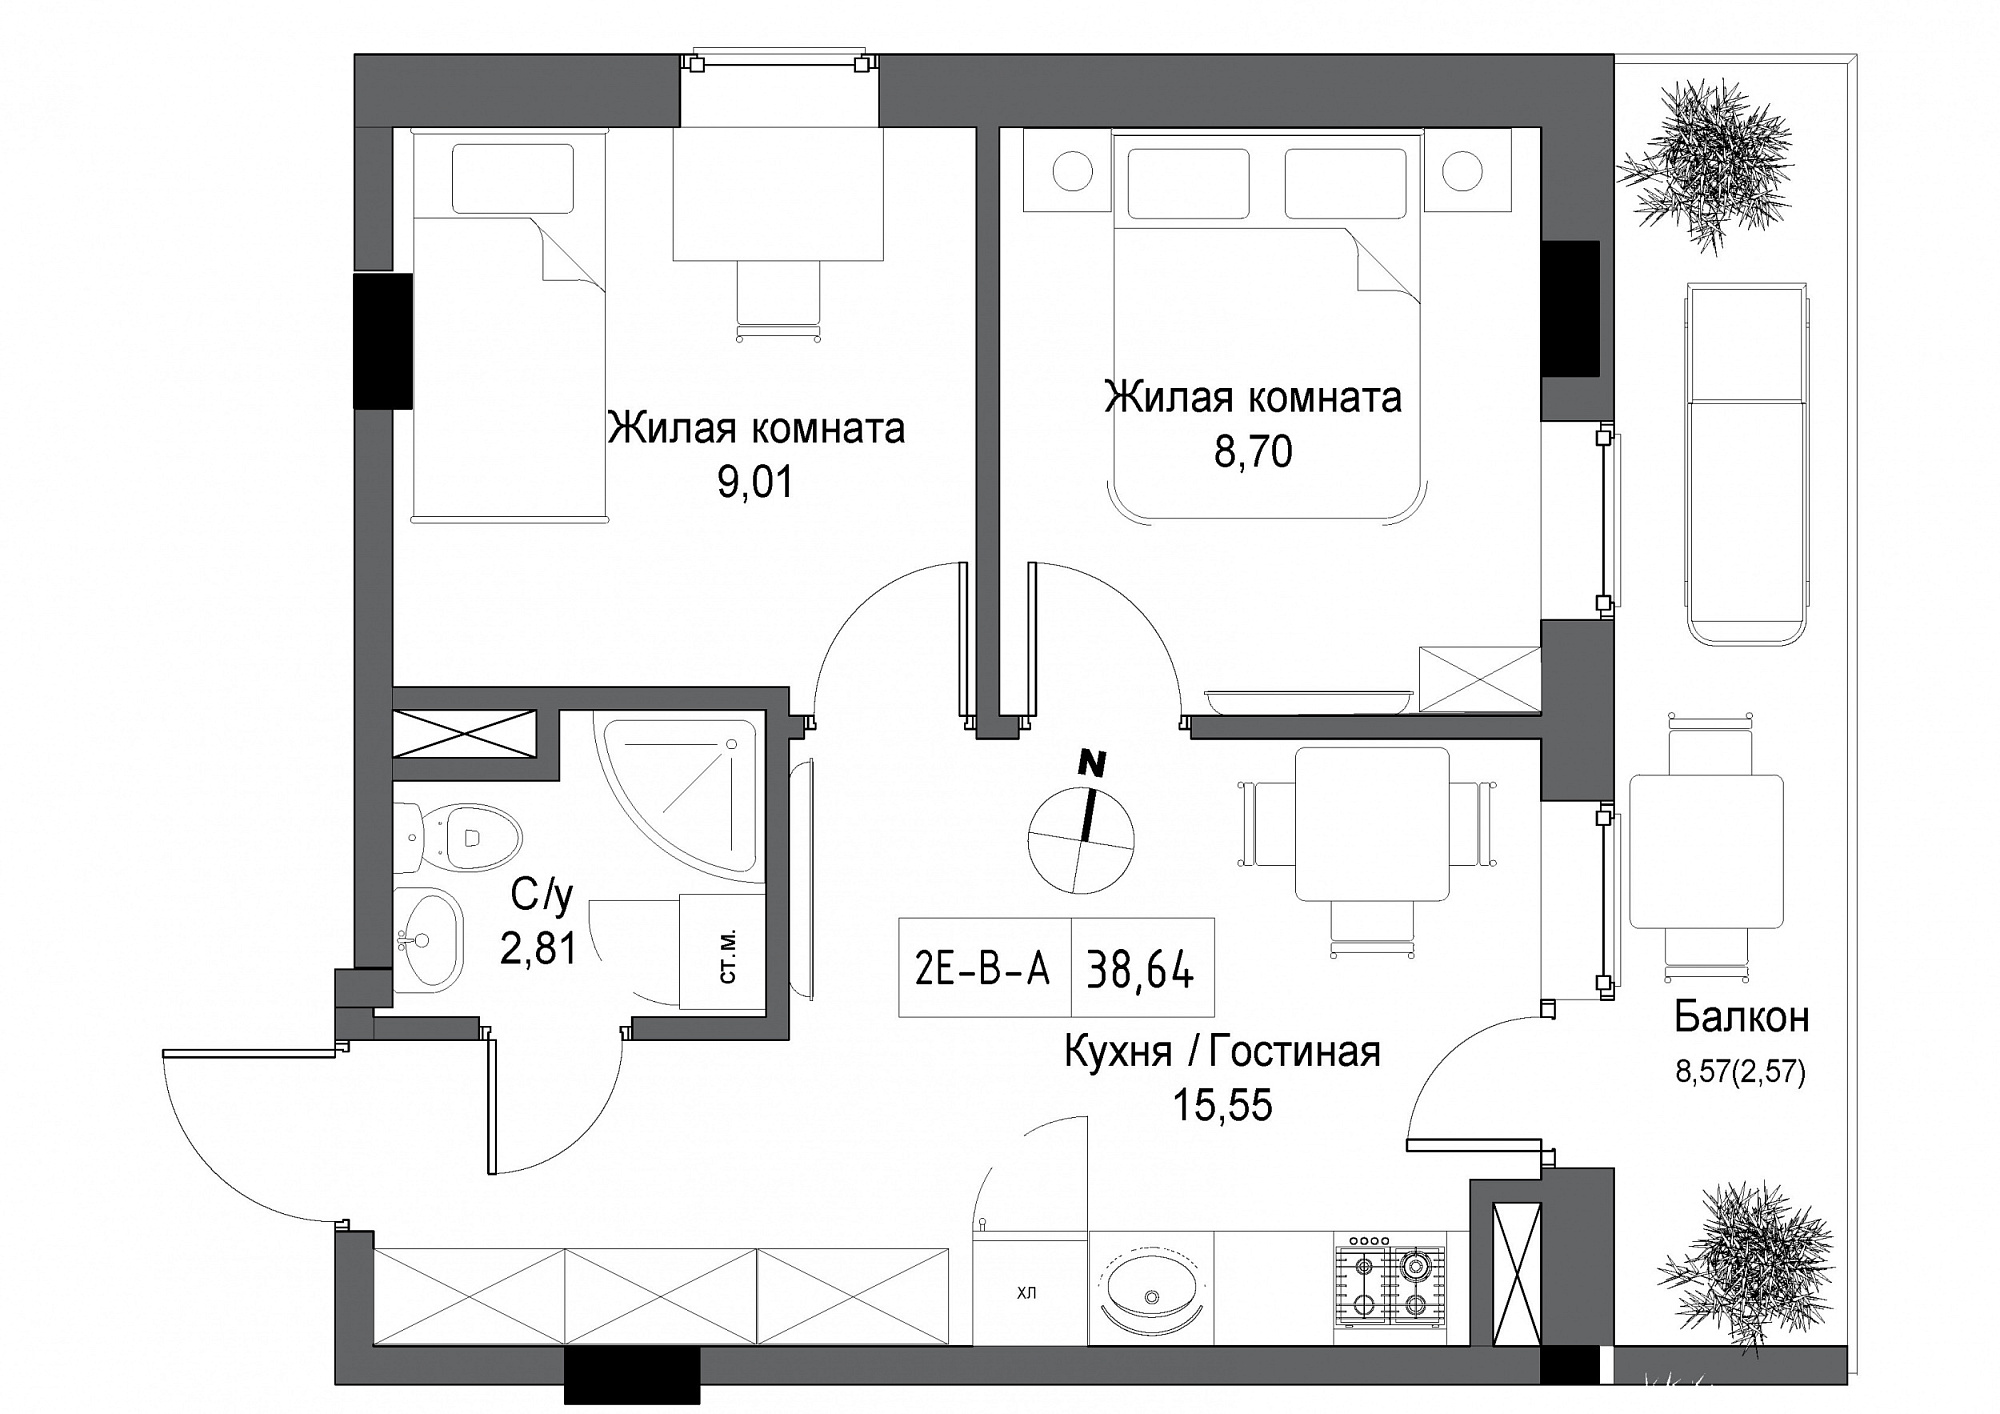 Planning 2-rm flats area 38.64m2, UM-004-05/0005.